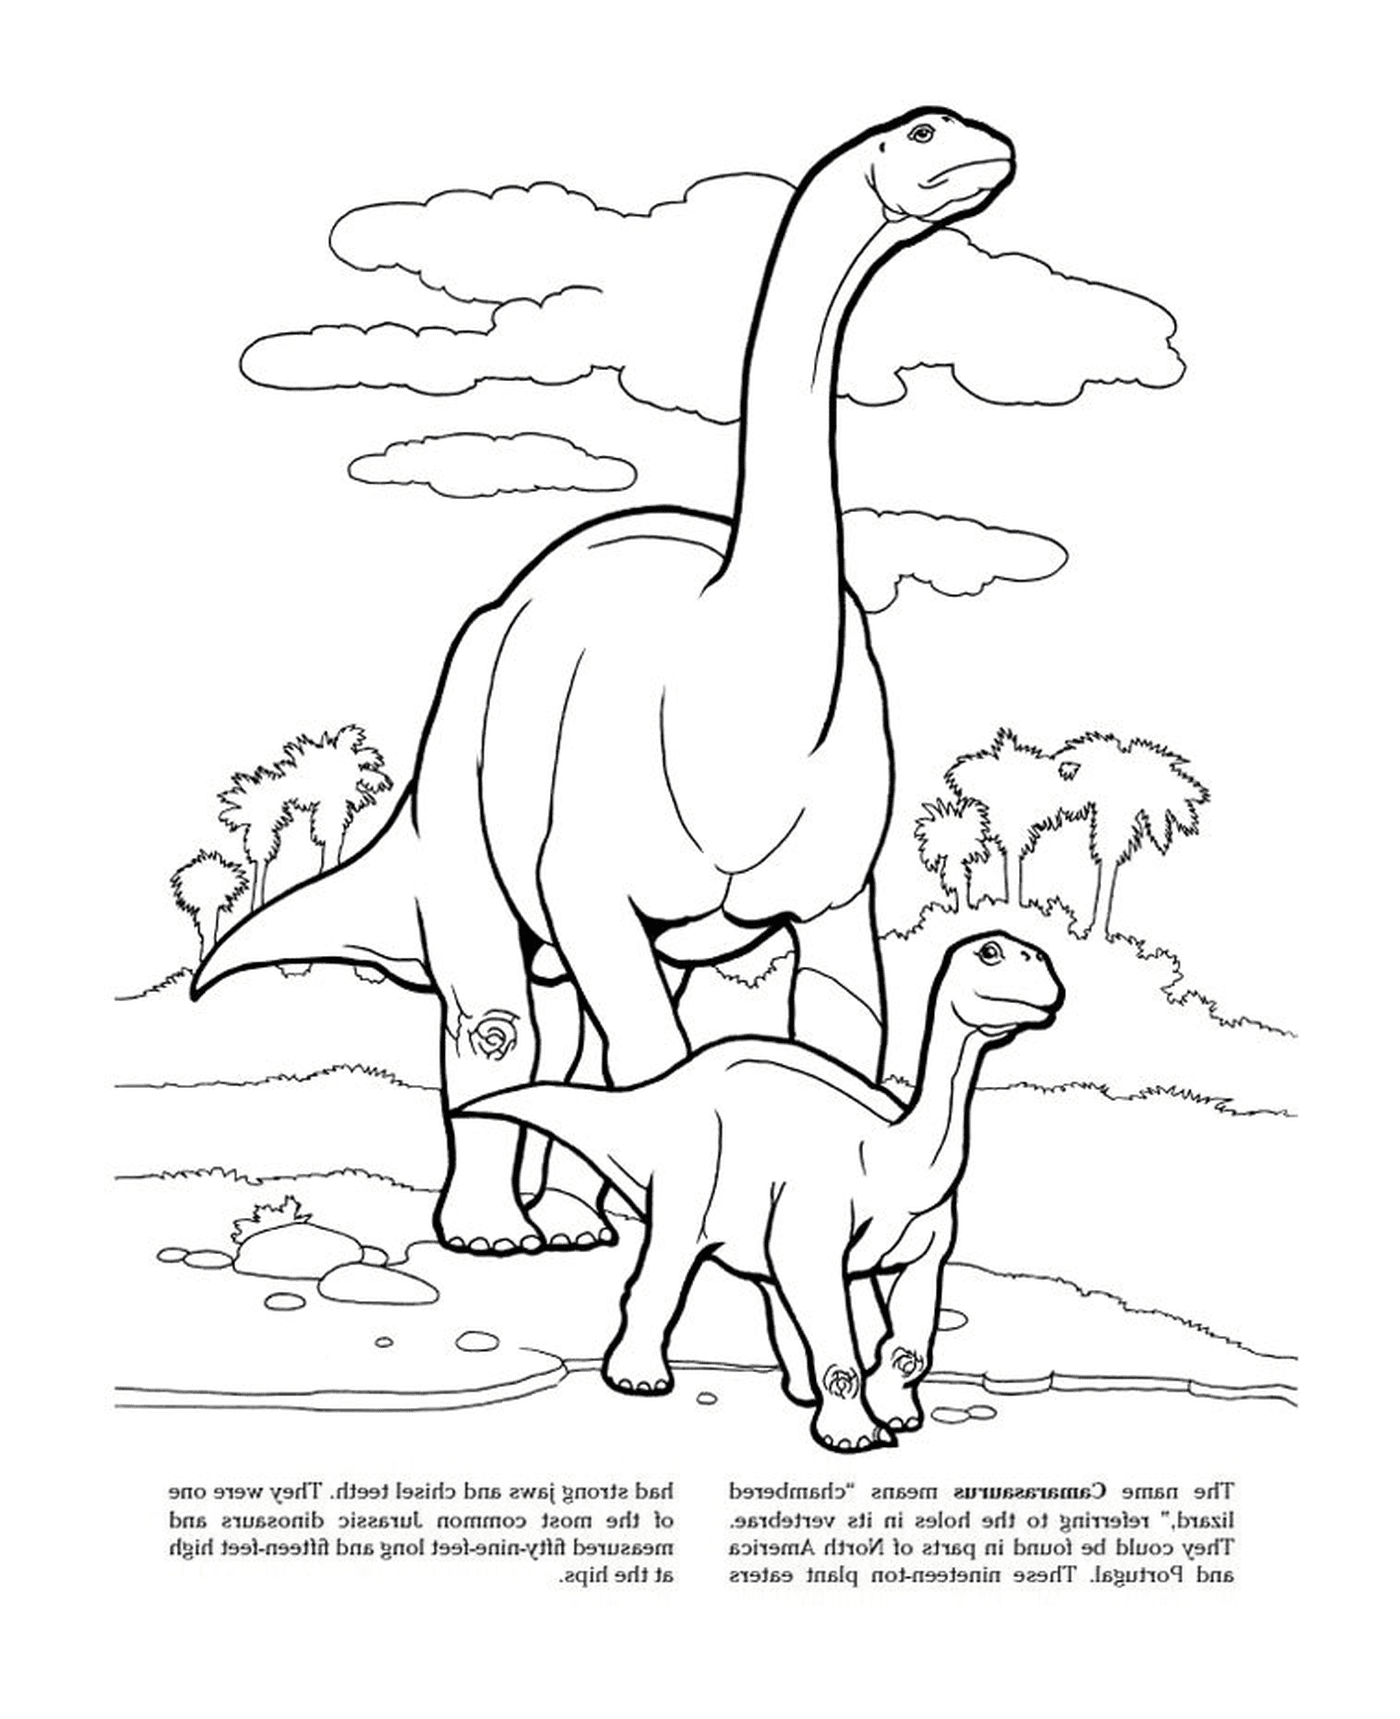  Camarasaurus of Jurassic Park, a family of dinosaurs 